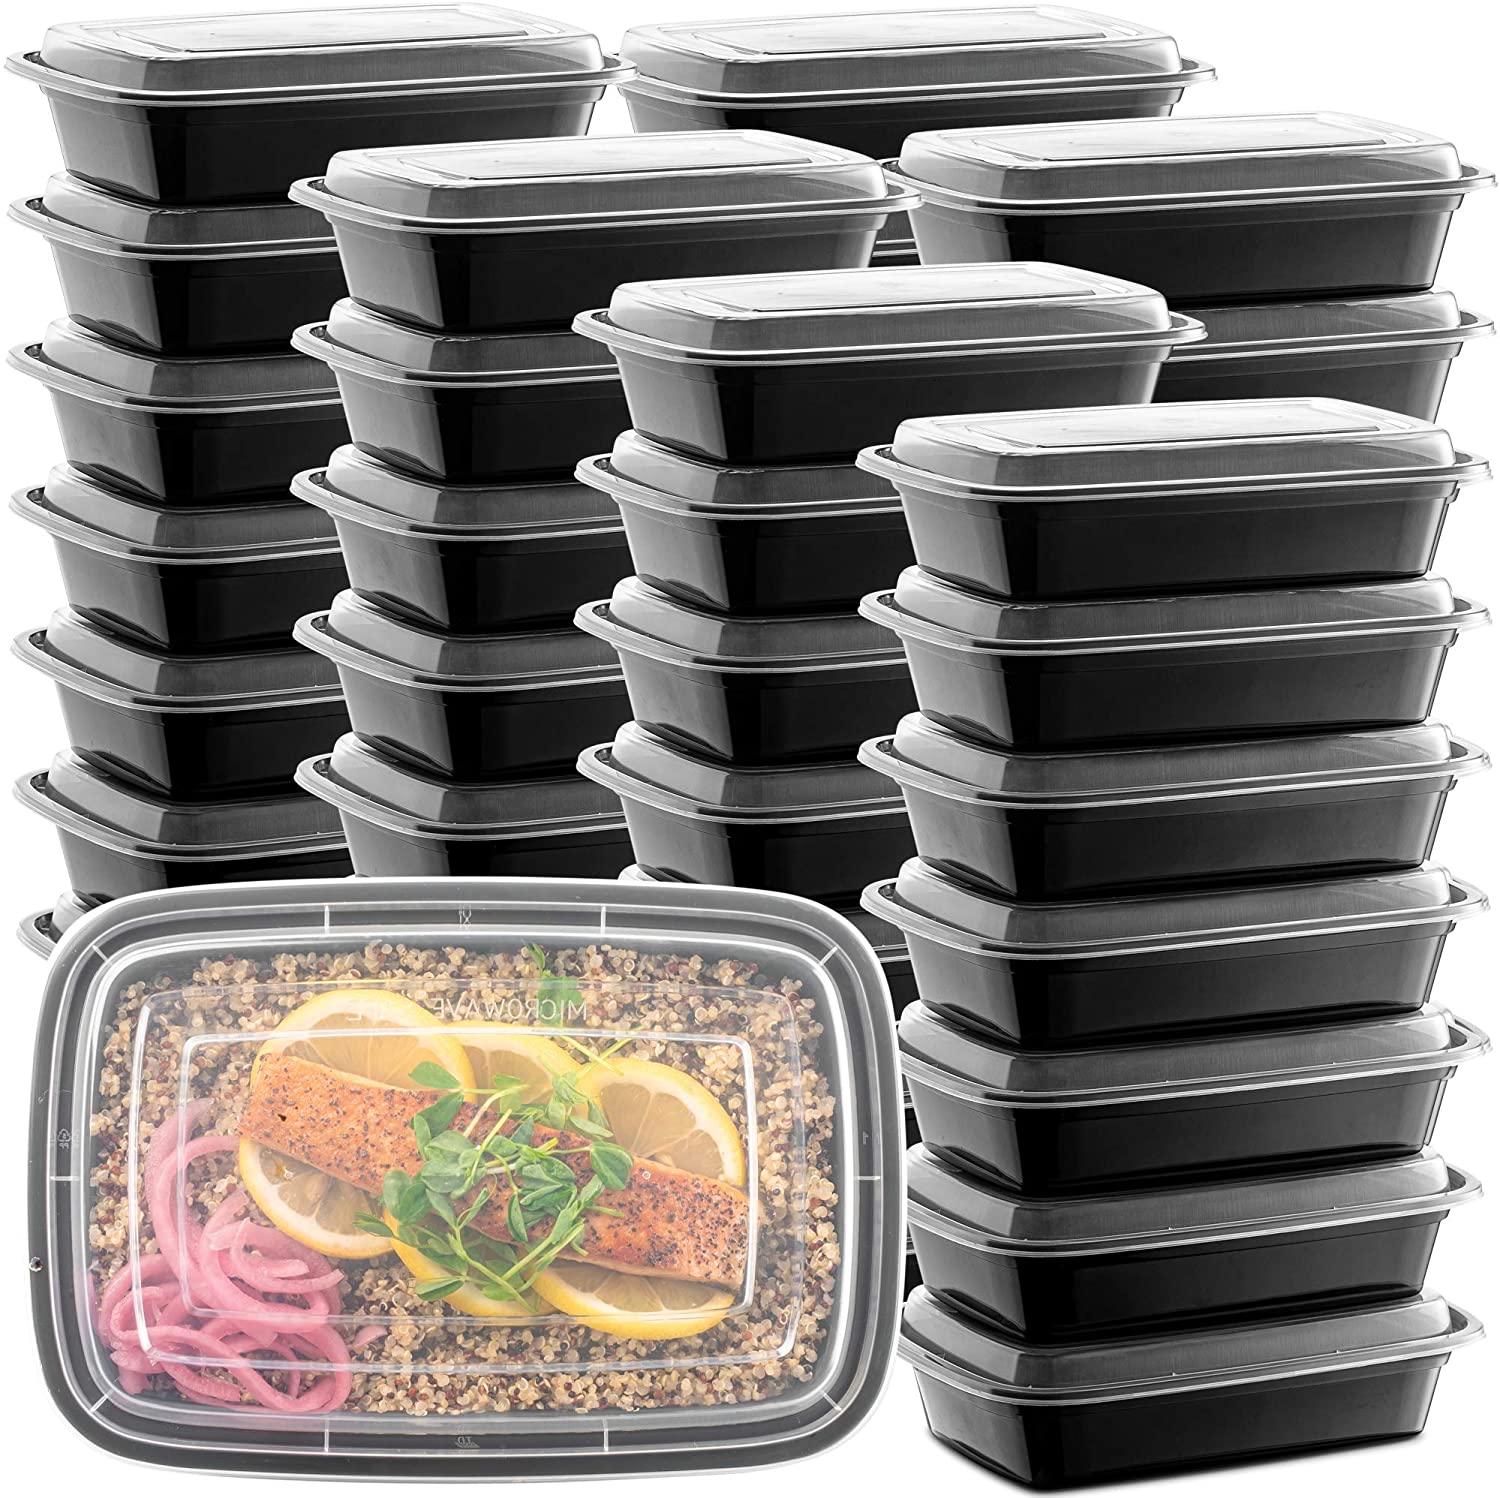 https://www.dontwasteyourmoney.com/wp-content/uploads/2022/01/promoze-freezer-safe-leak-proof-meal-prep-container-50-pack.jpg